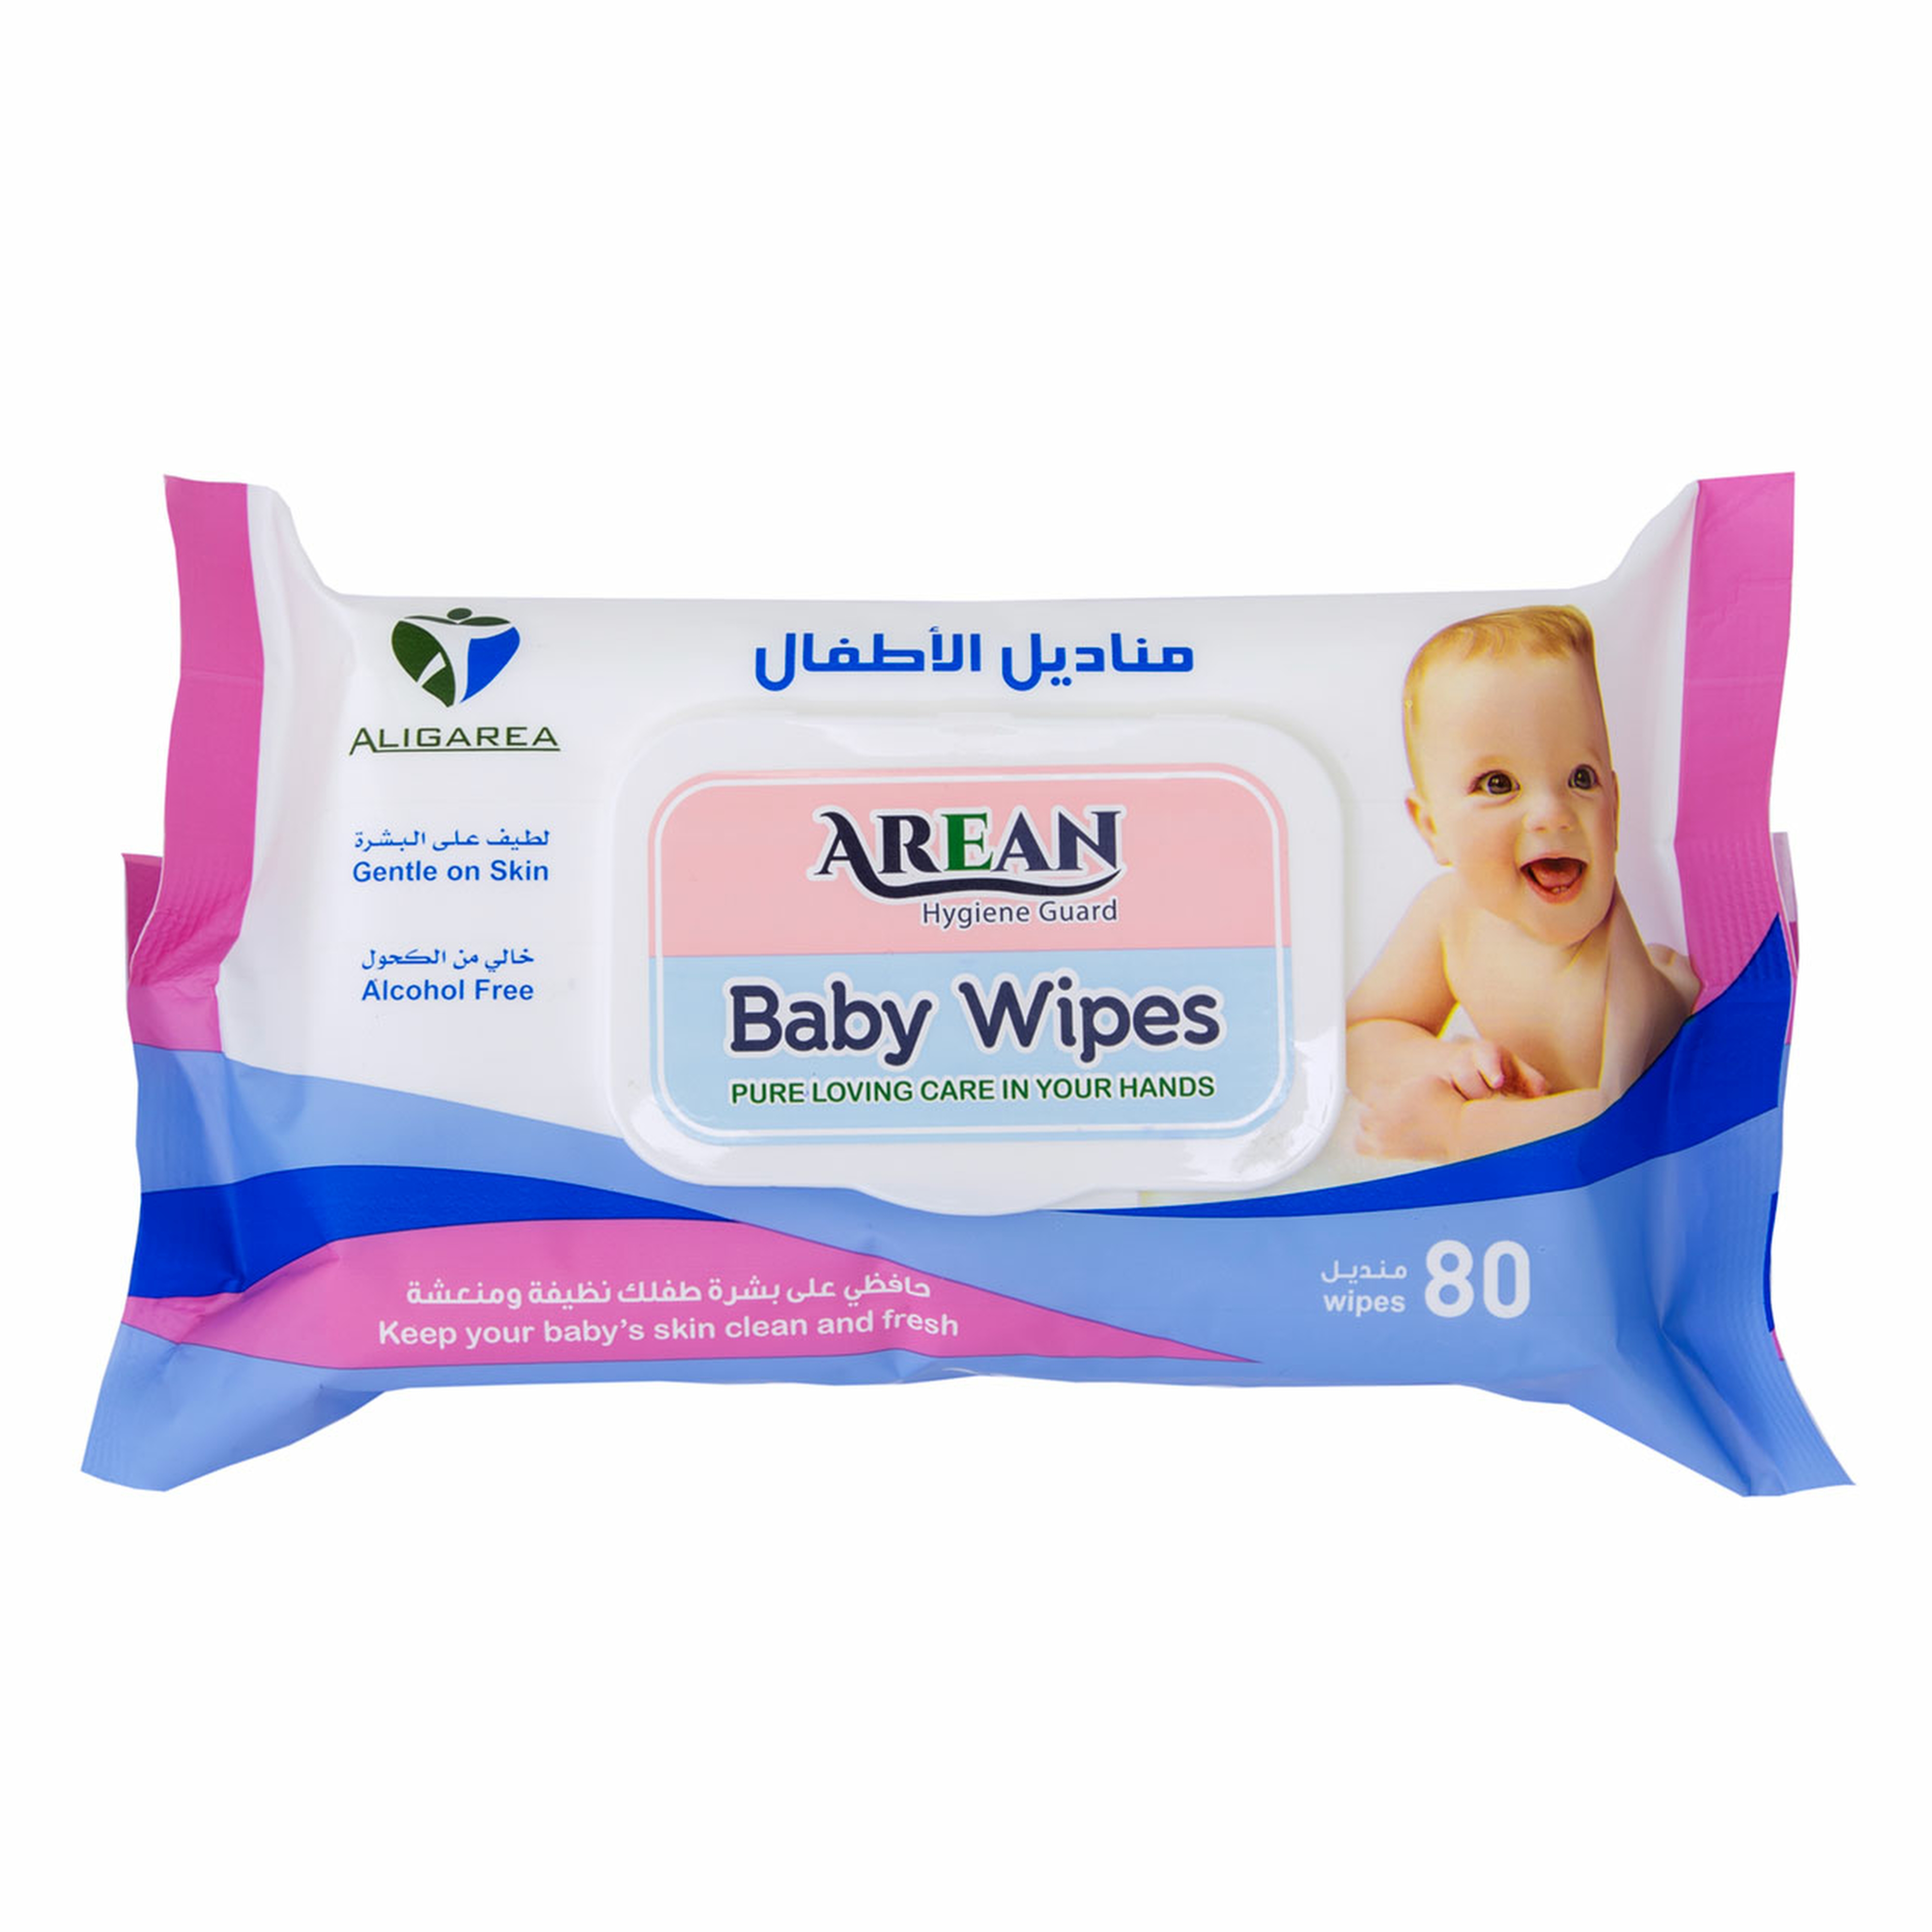 Arean moisturizing baby wipes (80s)